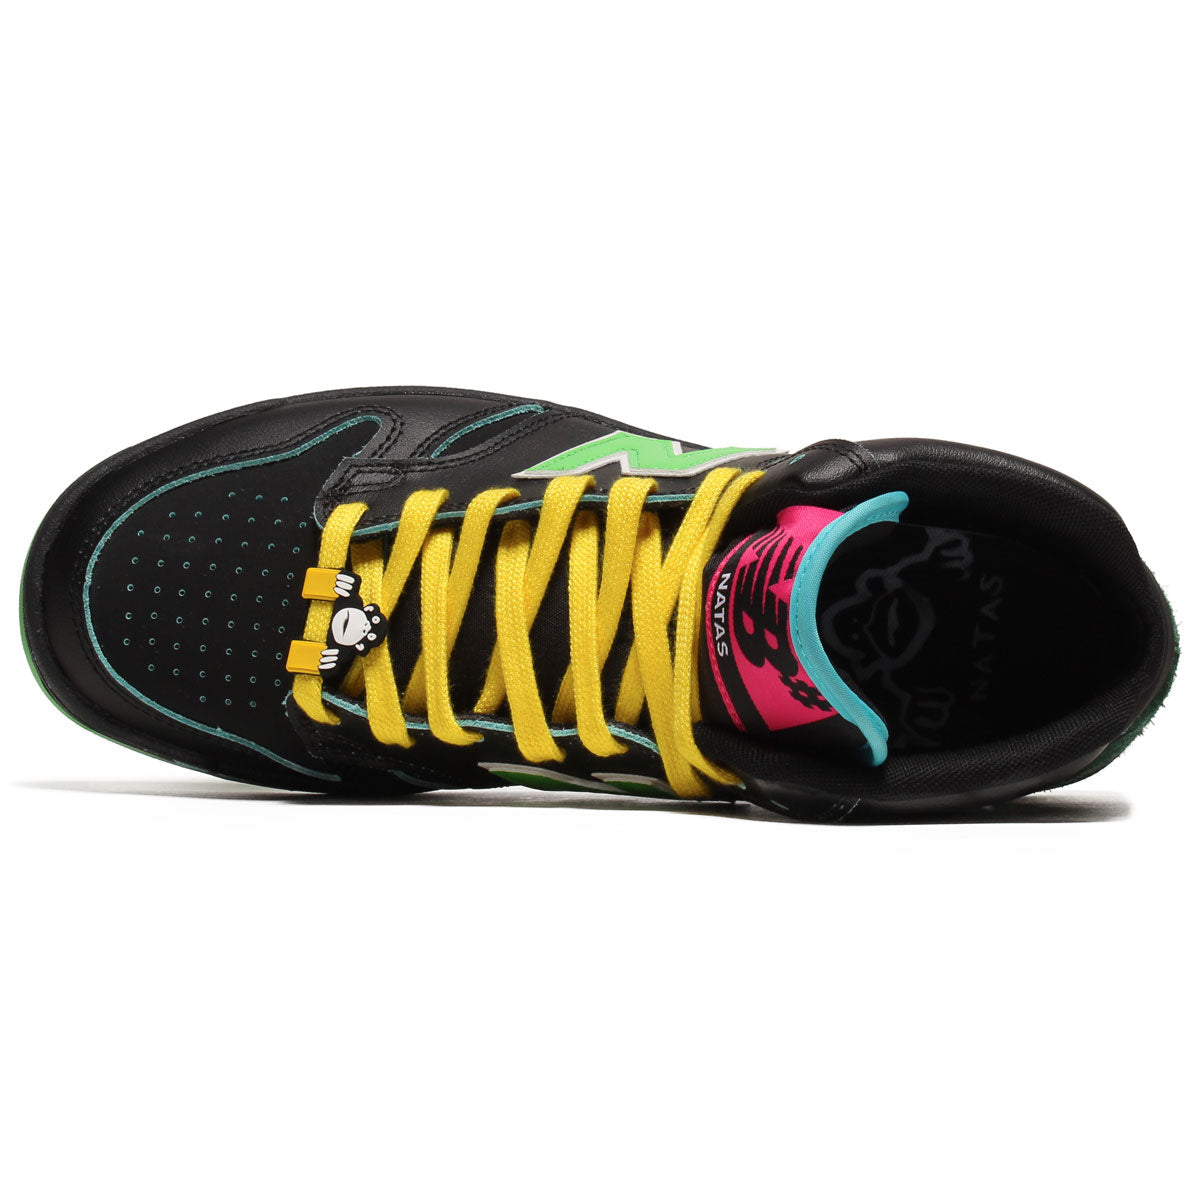 New Balance x Natas 480 High Shoes - Black/Green/Pink image 3